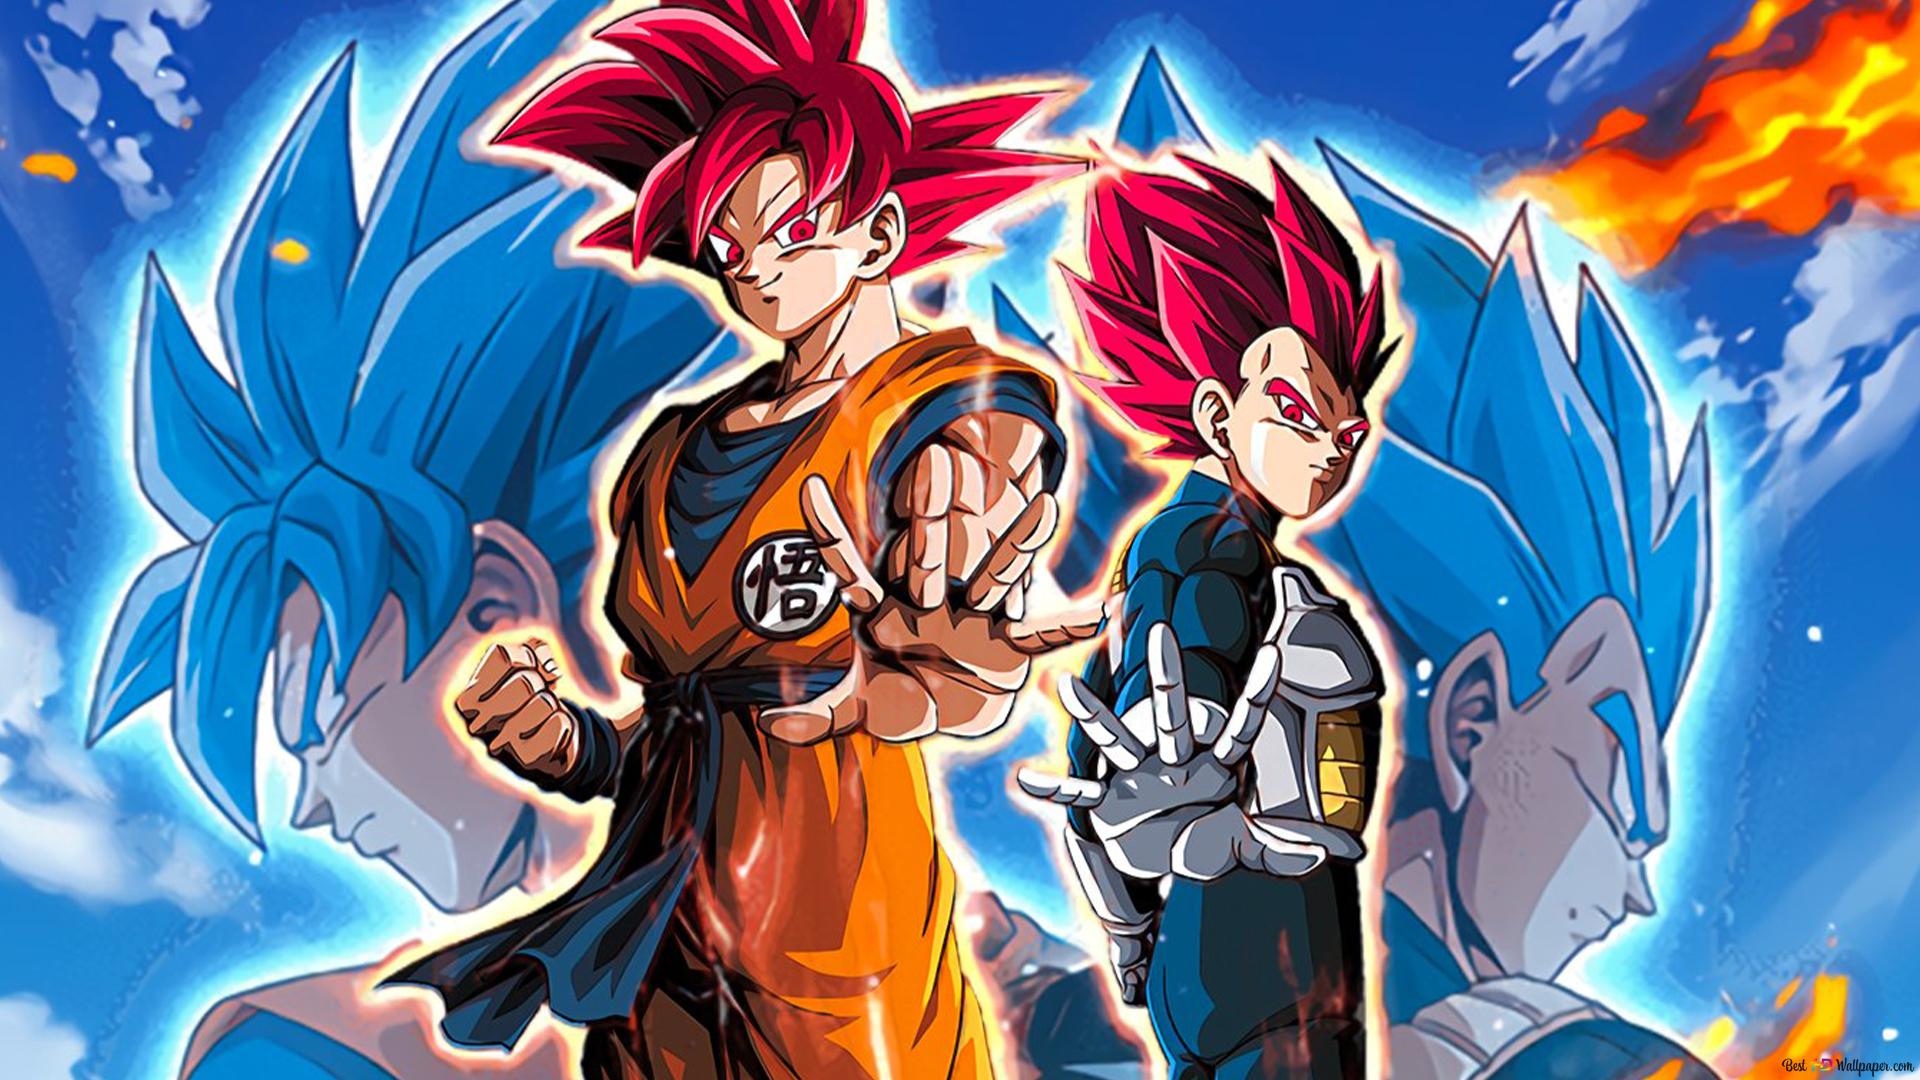 Super Saiyan God Goku & Vegeta from Dragon Ball Super: Super Broly [Dragon Ball Z Dokkan Battle Art] HD wallpaper download